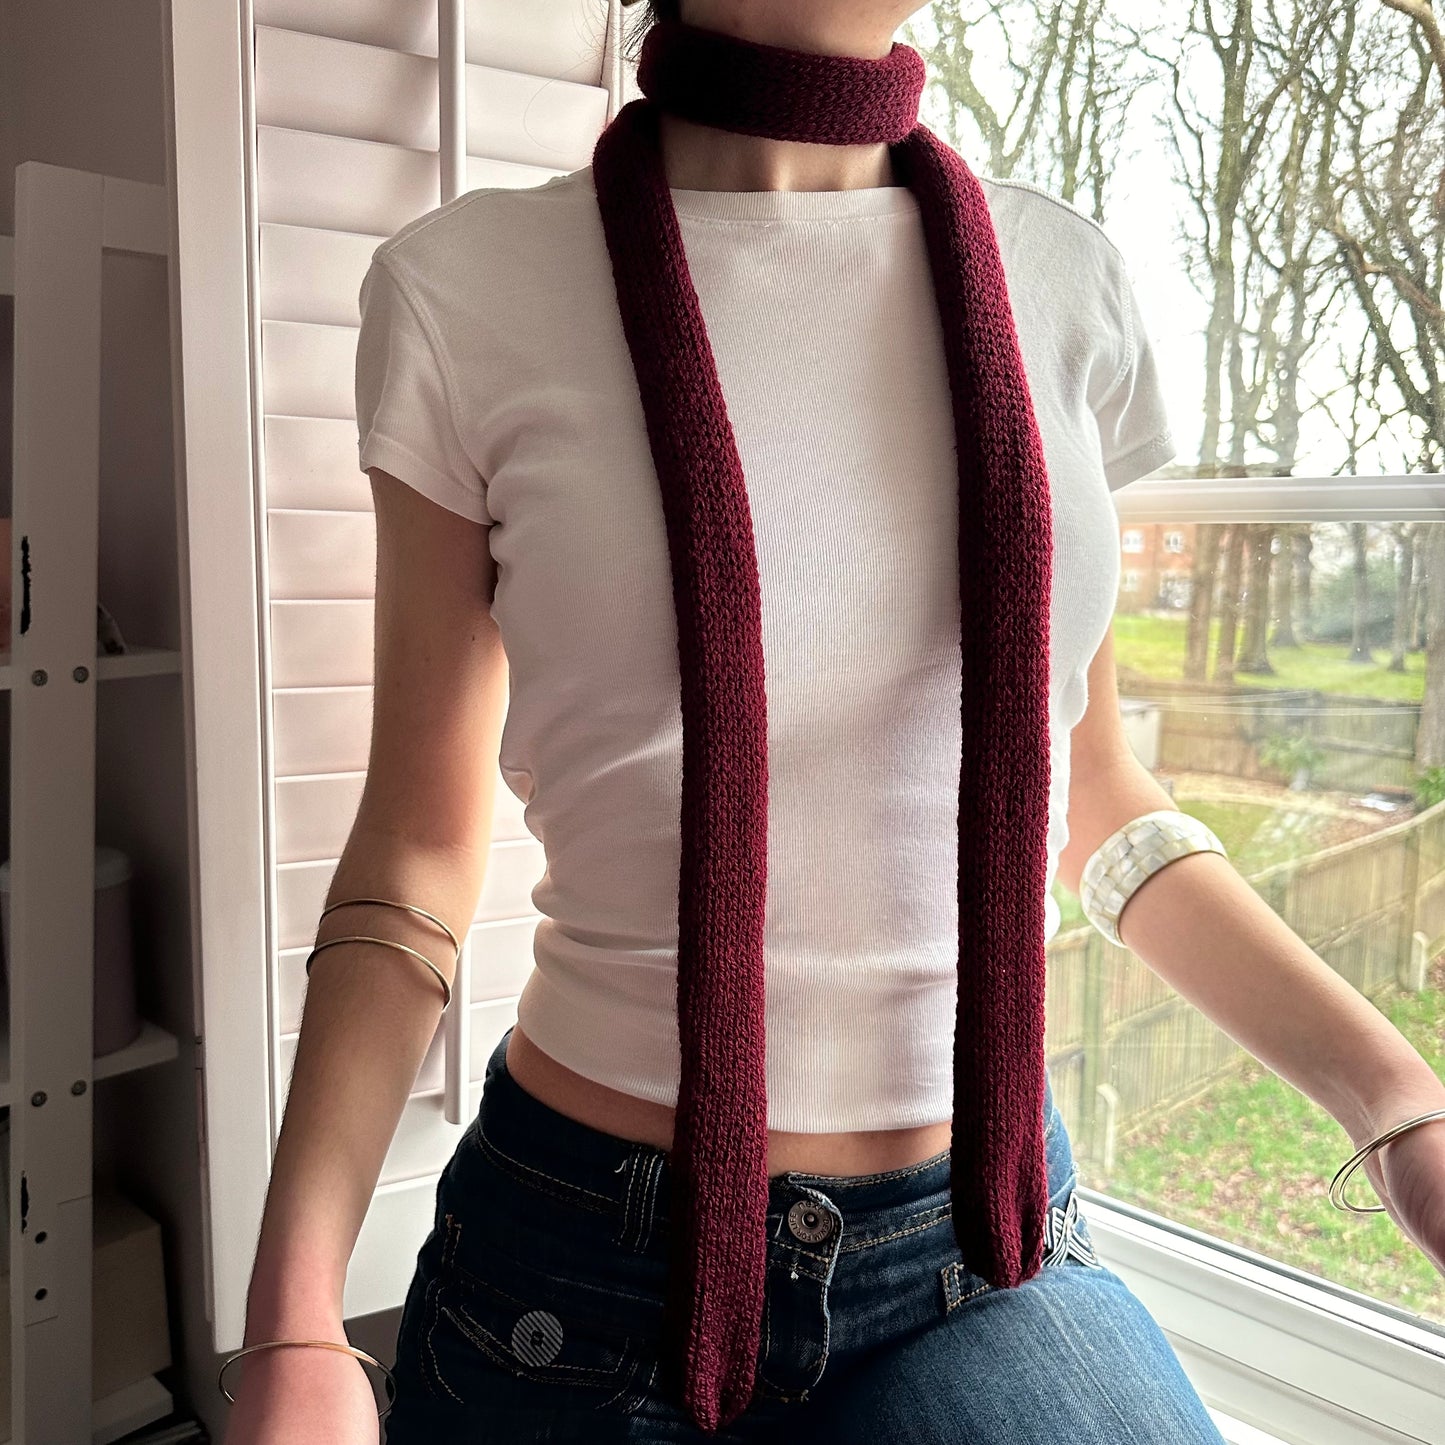 Handmade knitted skinny scarf in burgundy